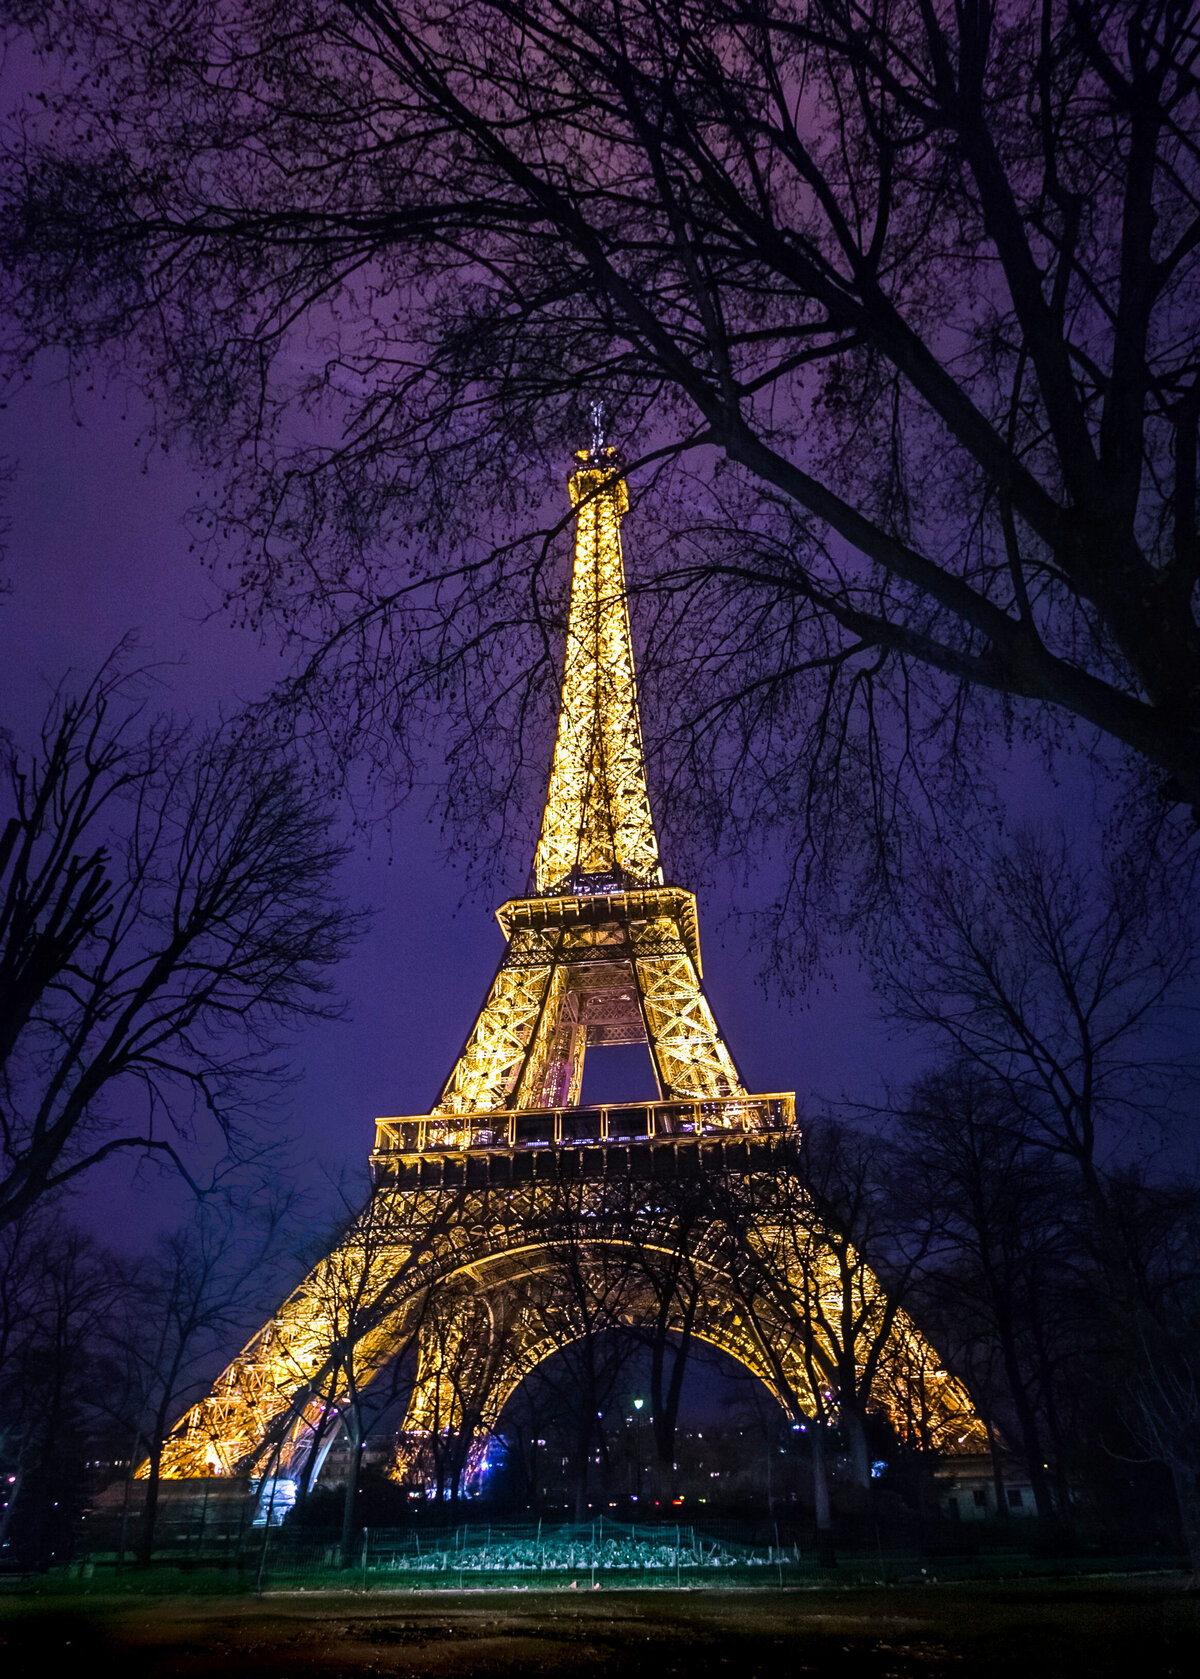 073-KBP-Paris-France-Eiffel-Tower-light-night